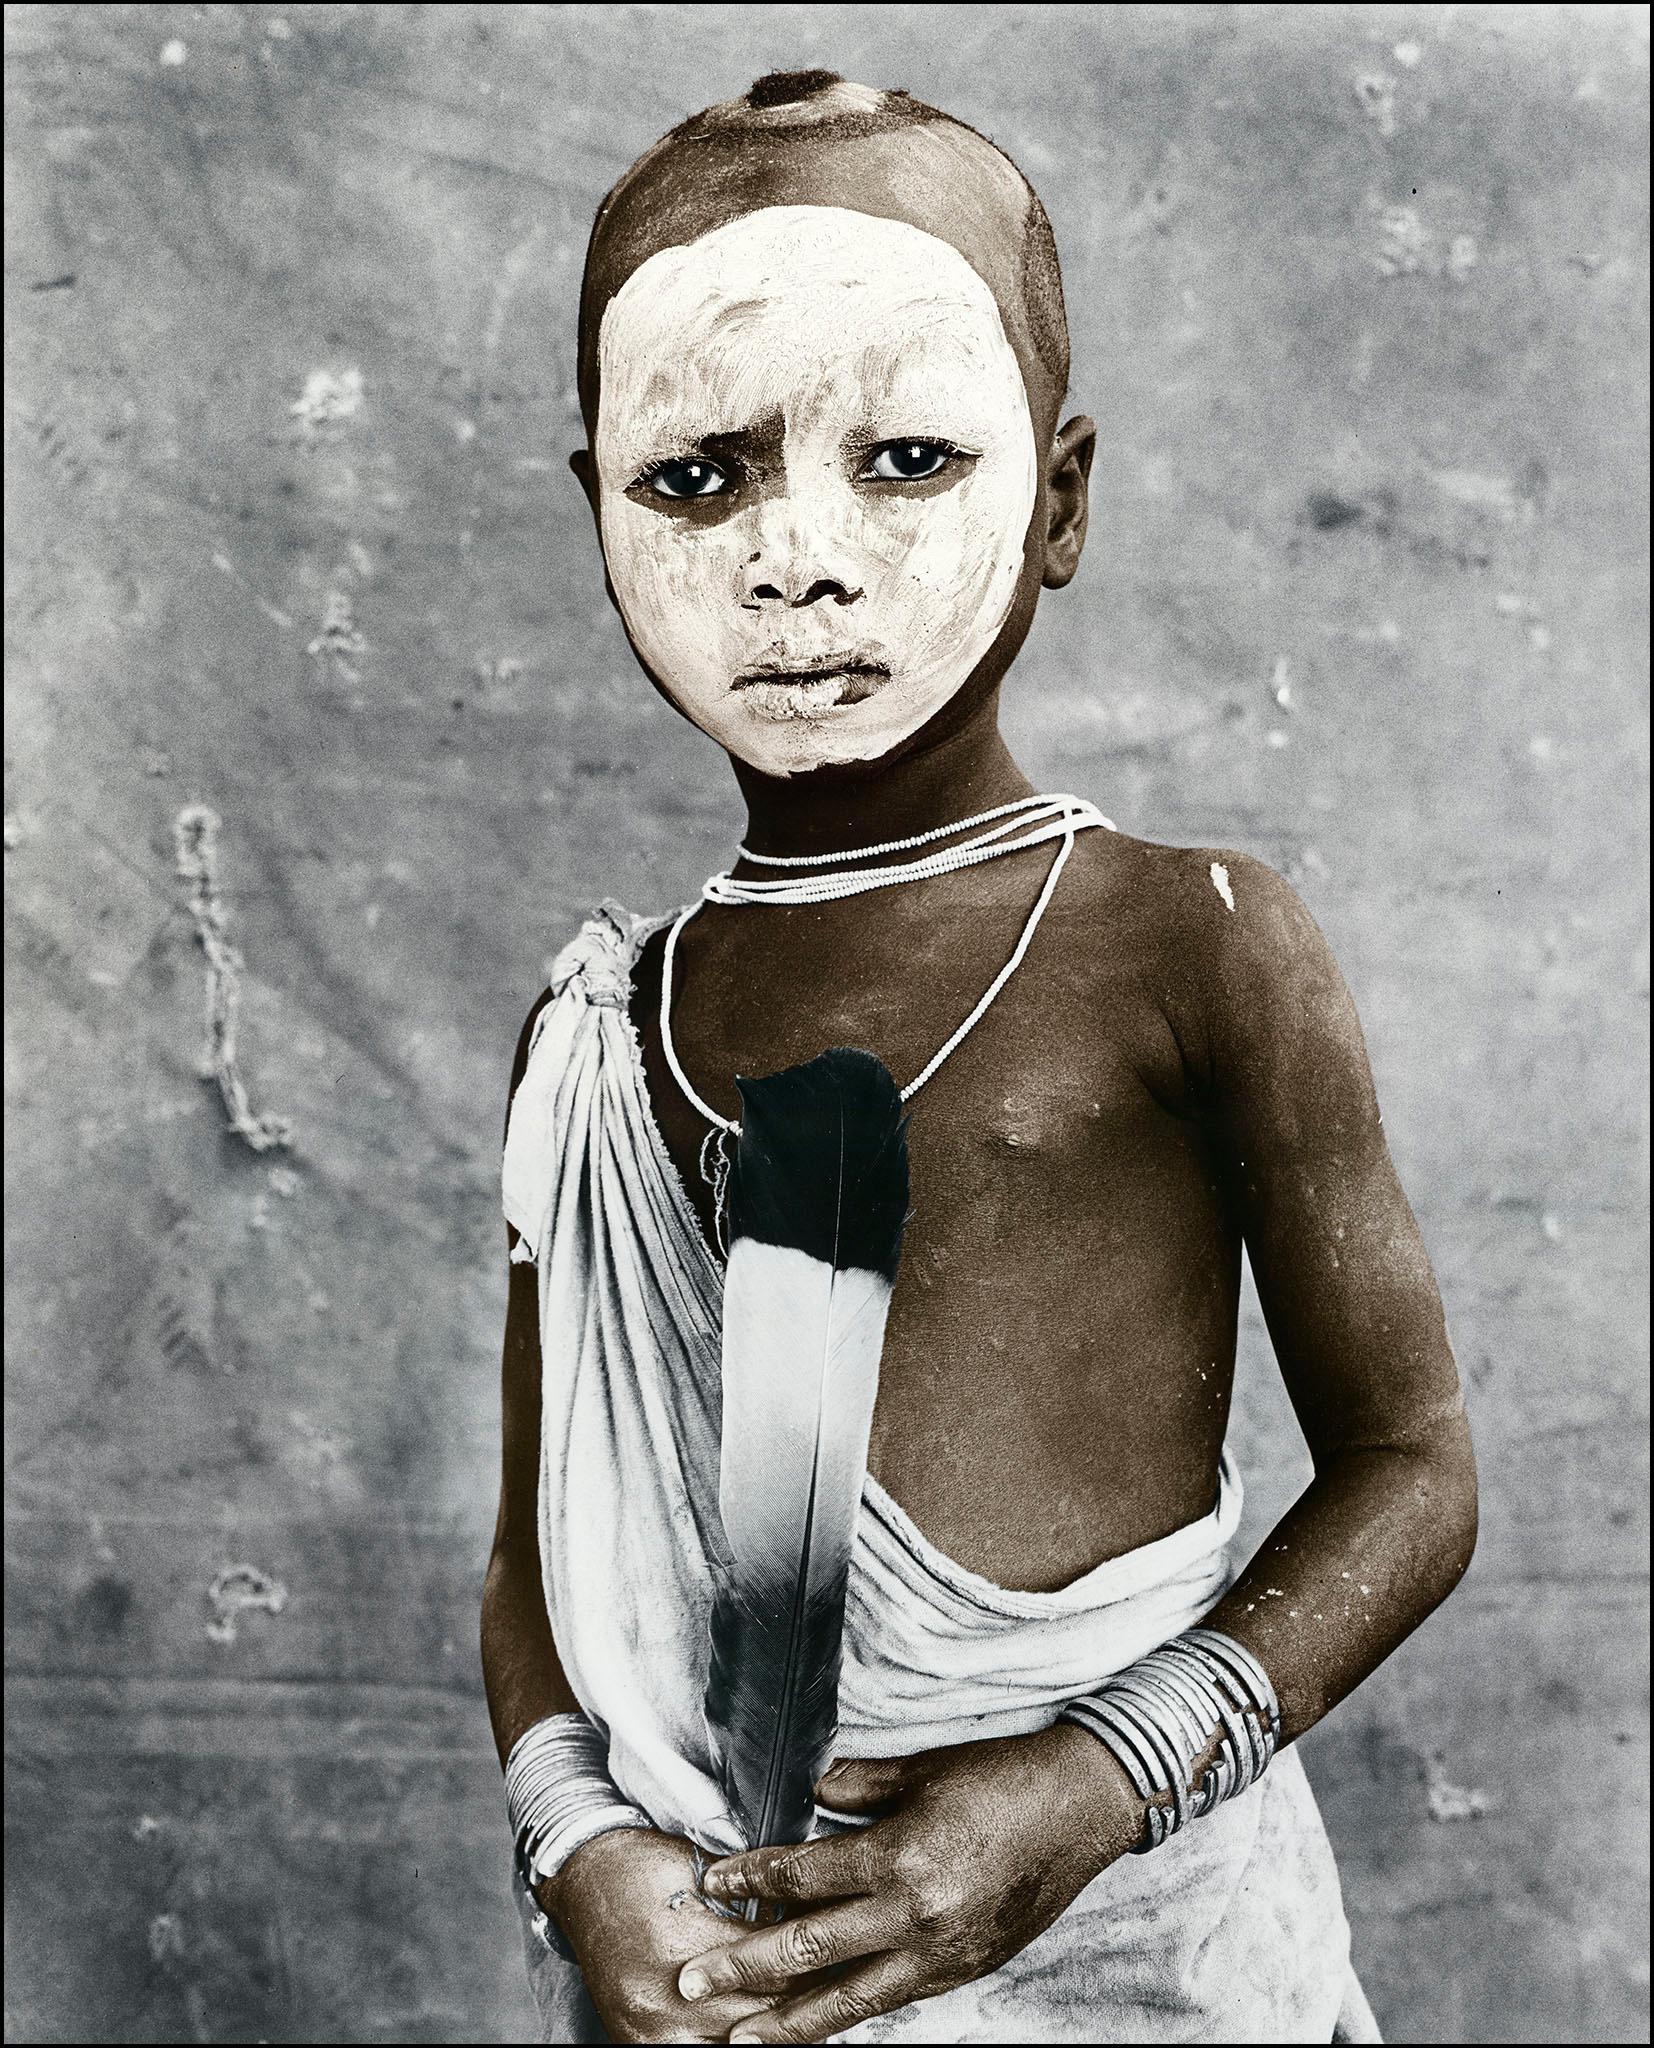 Olekibo, Suri, Ethiopia, Silver Gelatine, Photography, Contemporary